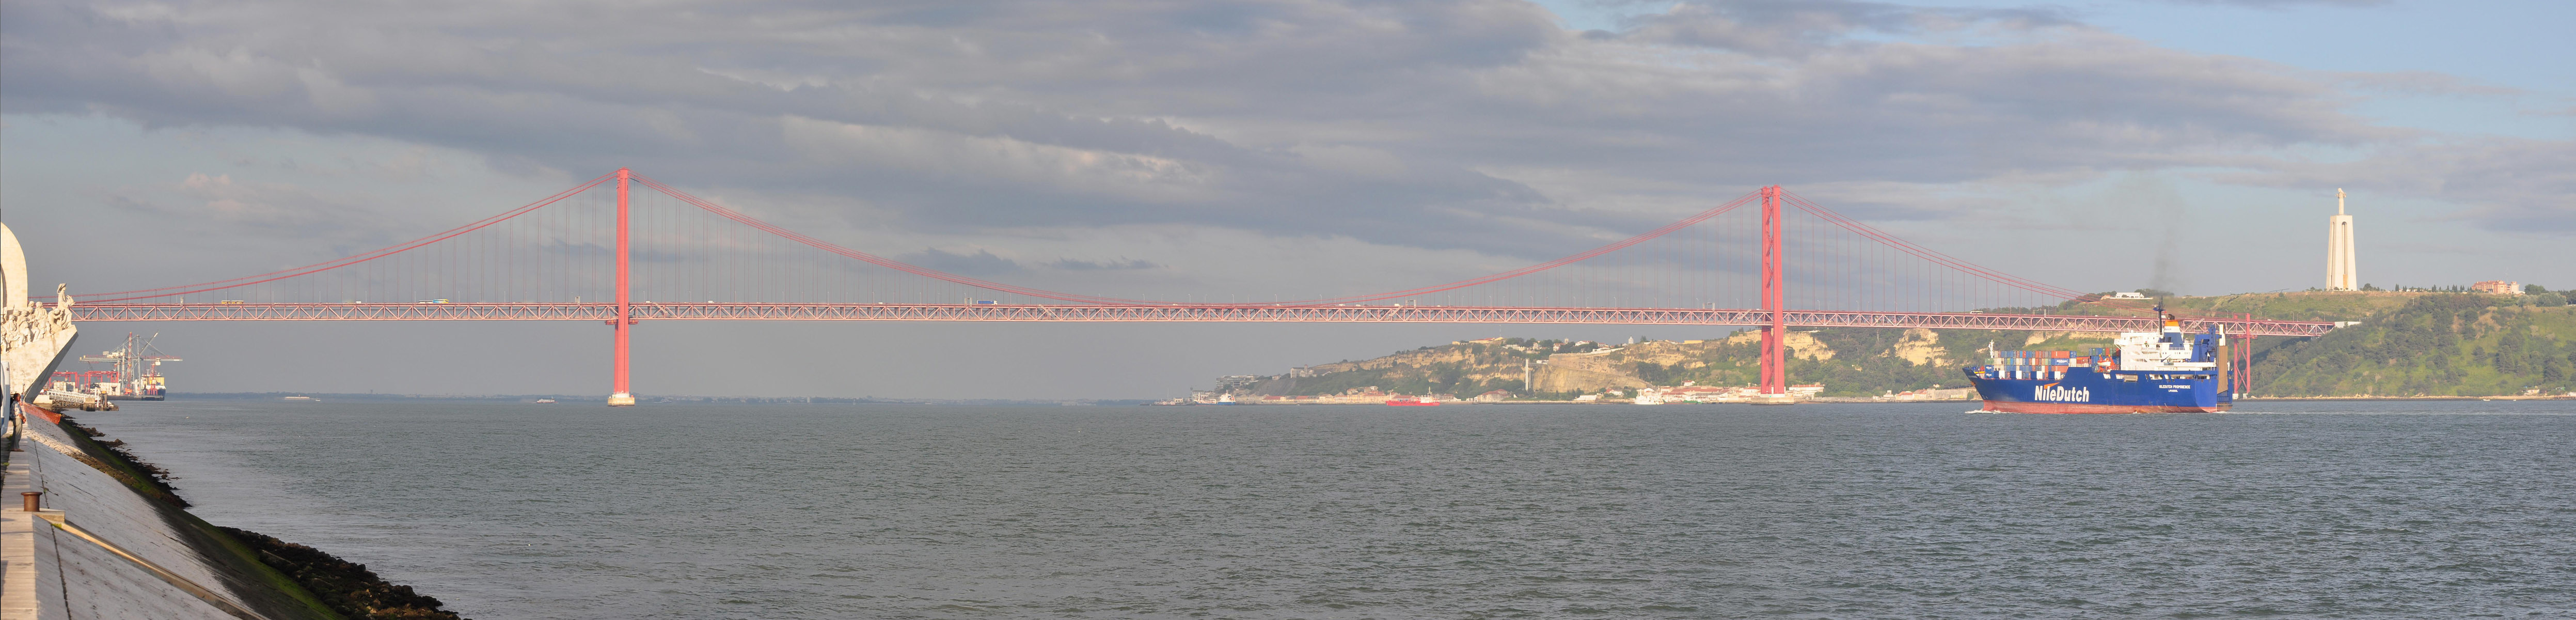 Bridge of 25th April and Christo-Rei - Lisbon - Portugal2.jpg